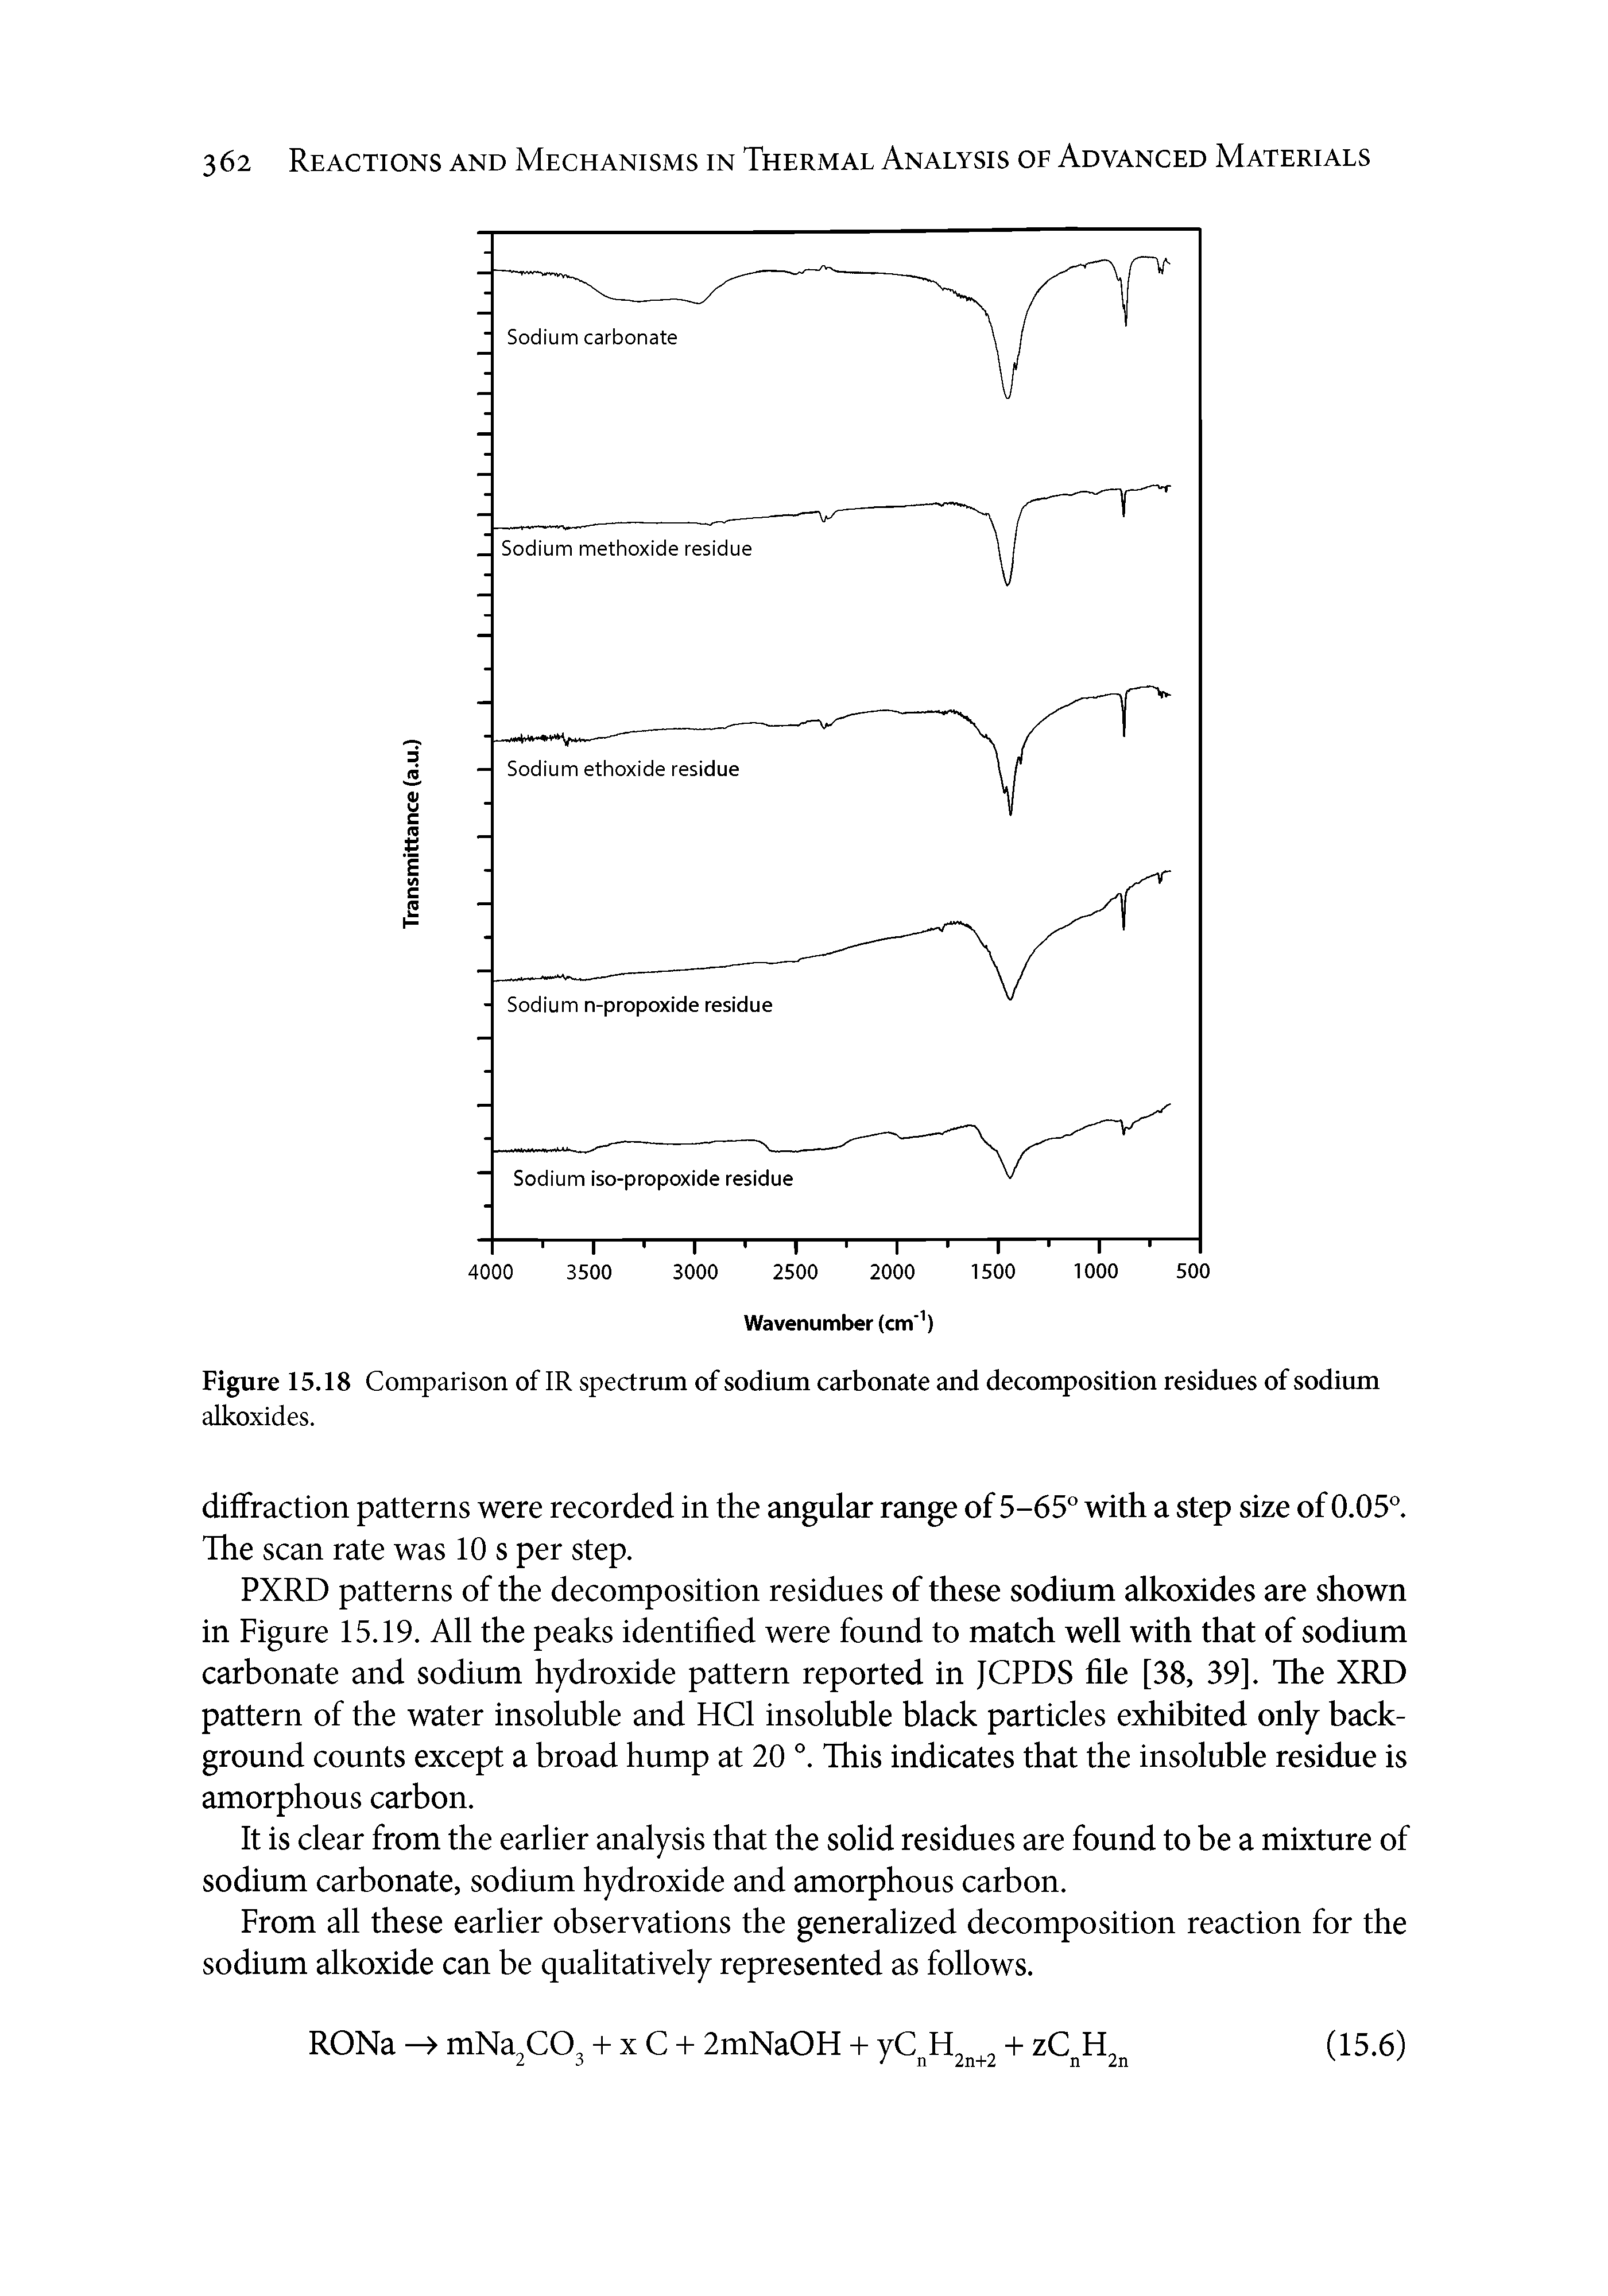 Figure 15.18 Comparison of IR spectrum of sodium carbonate and decomposition residues of sodium alkoxides.